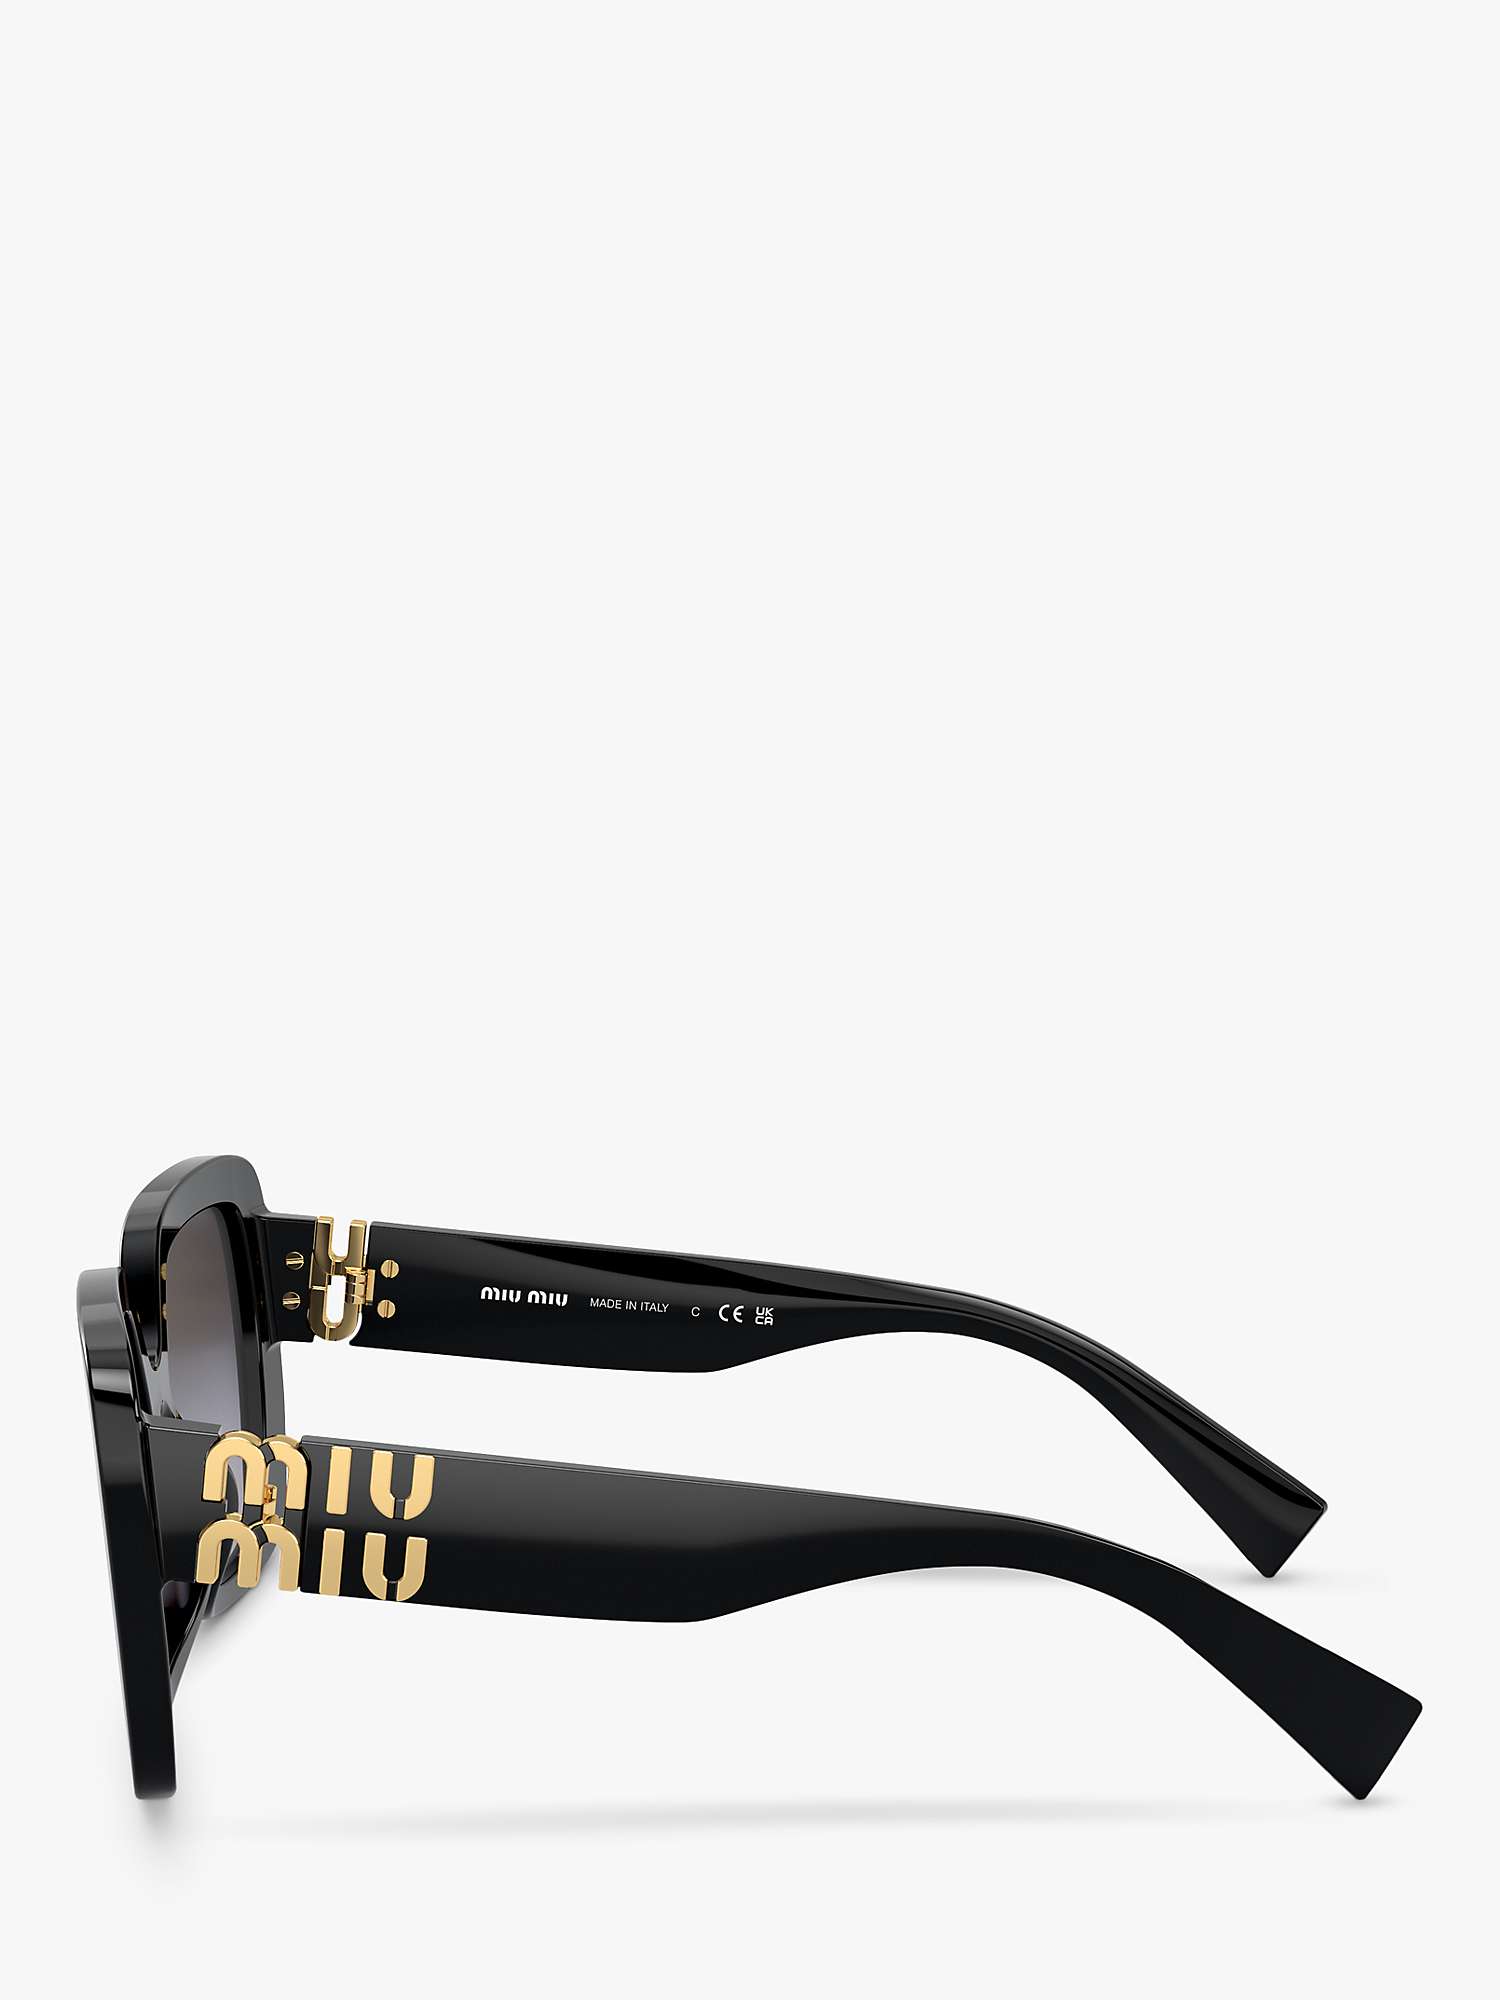 Buy Miu Miu MU10YS8 Women's Rectangular Sunglasses, Black Online at johnlewis.com